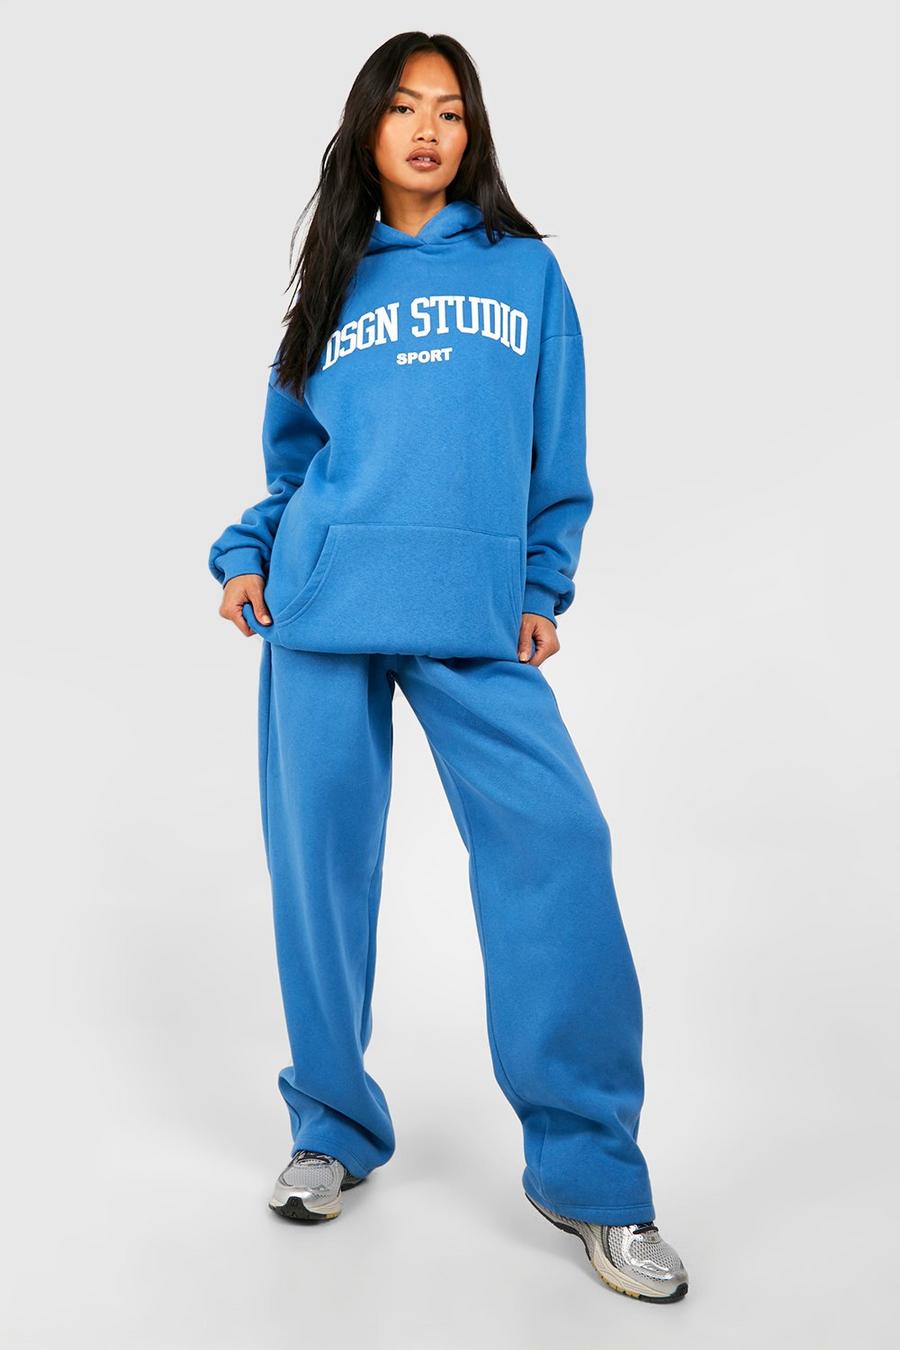 Oversize Trainingsanzug mit Dsgn Studio Sports Slogan und Kapuze, Blue image number 1